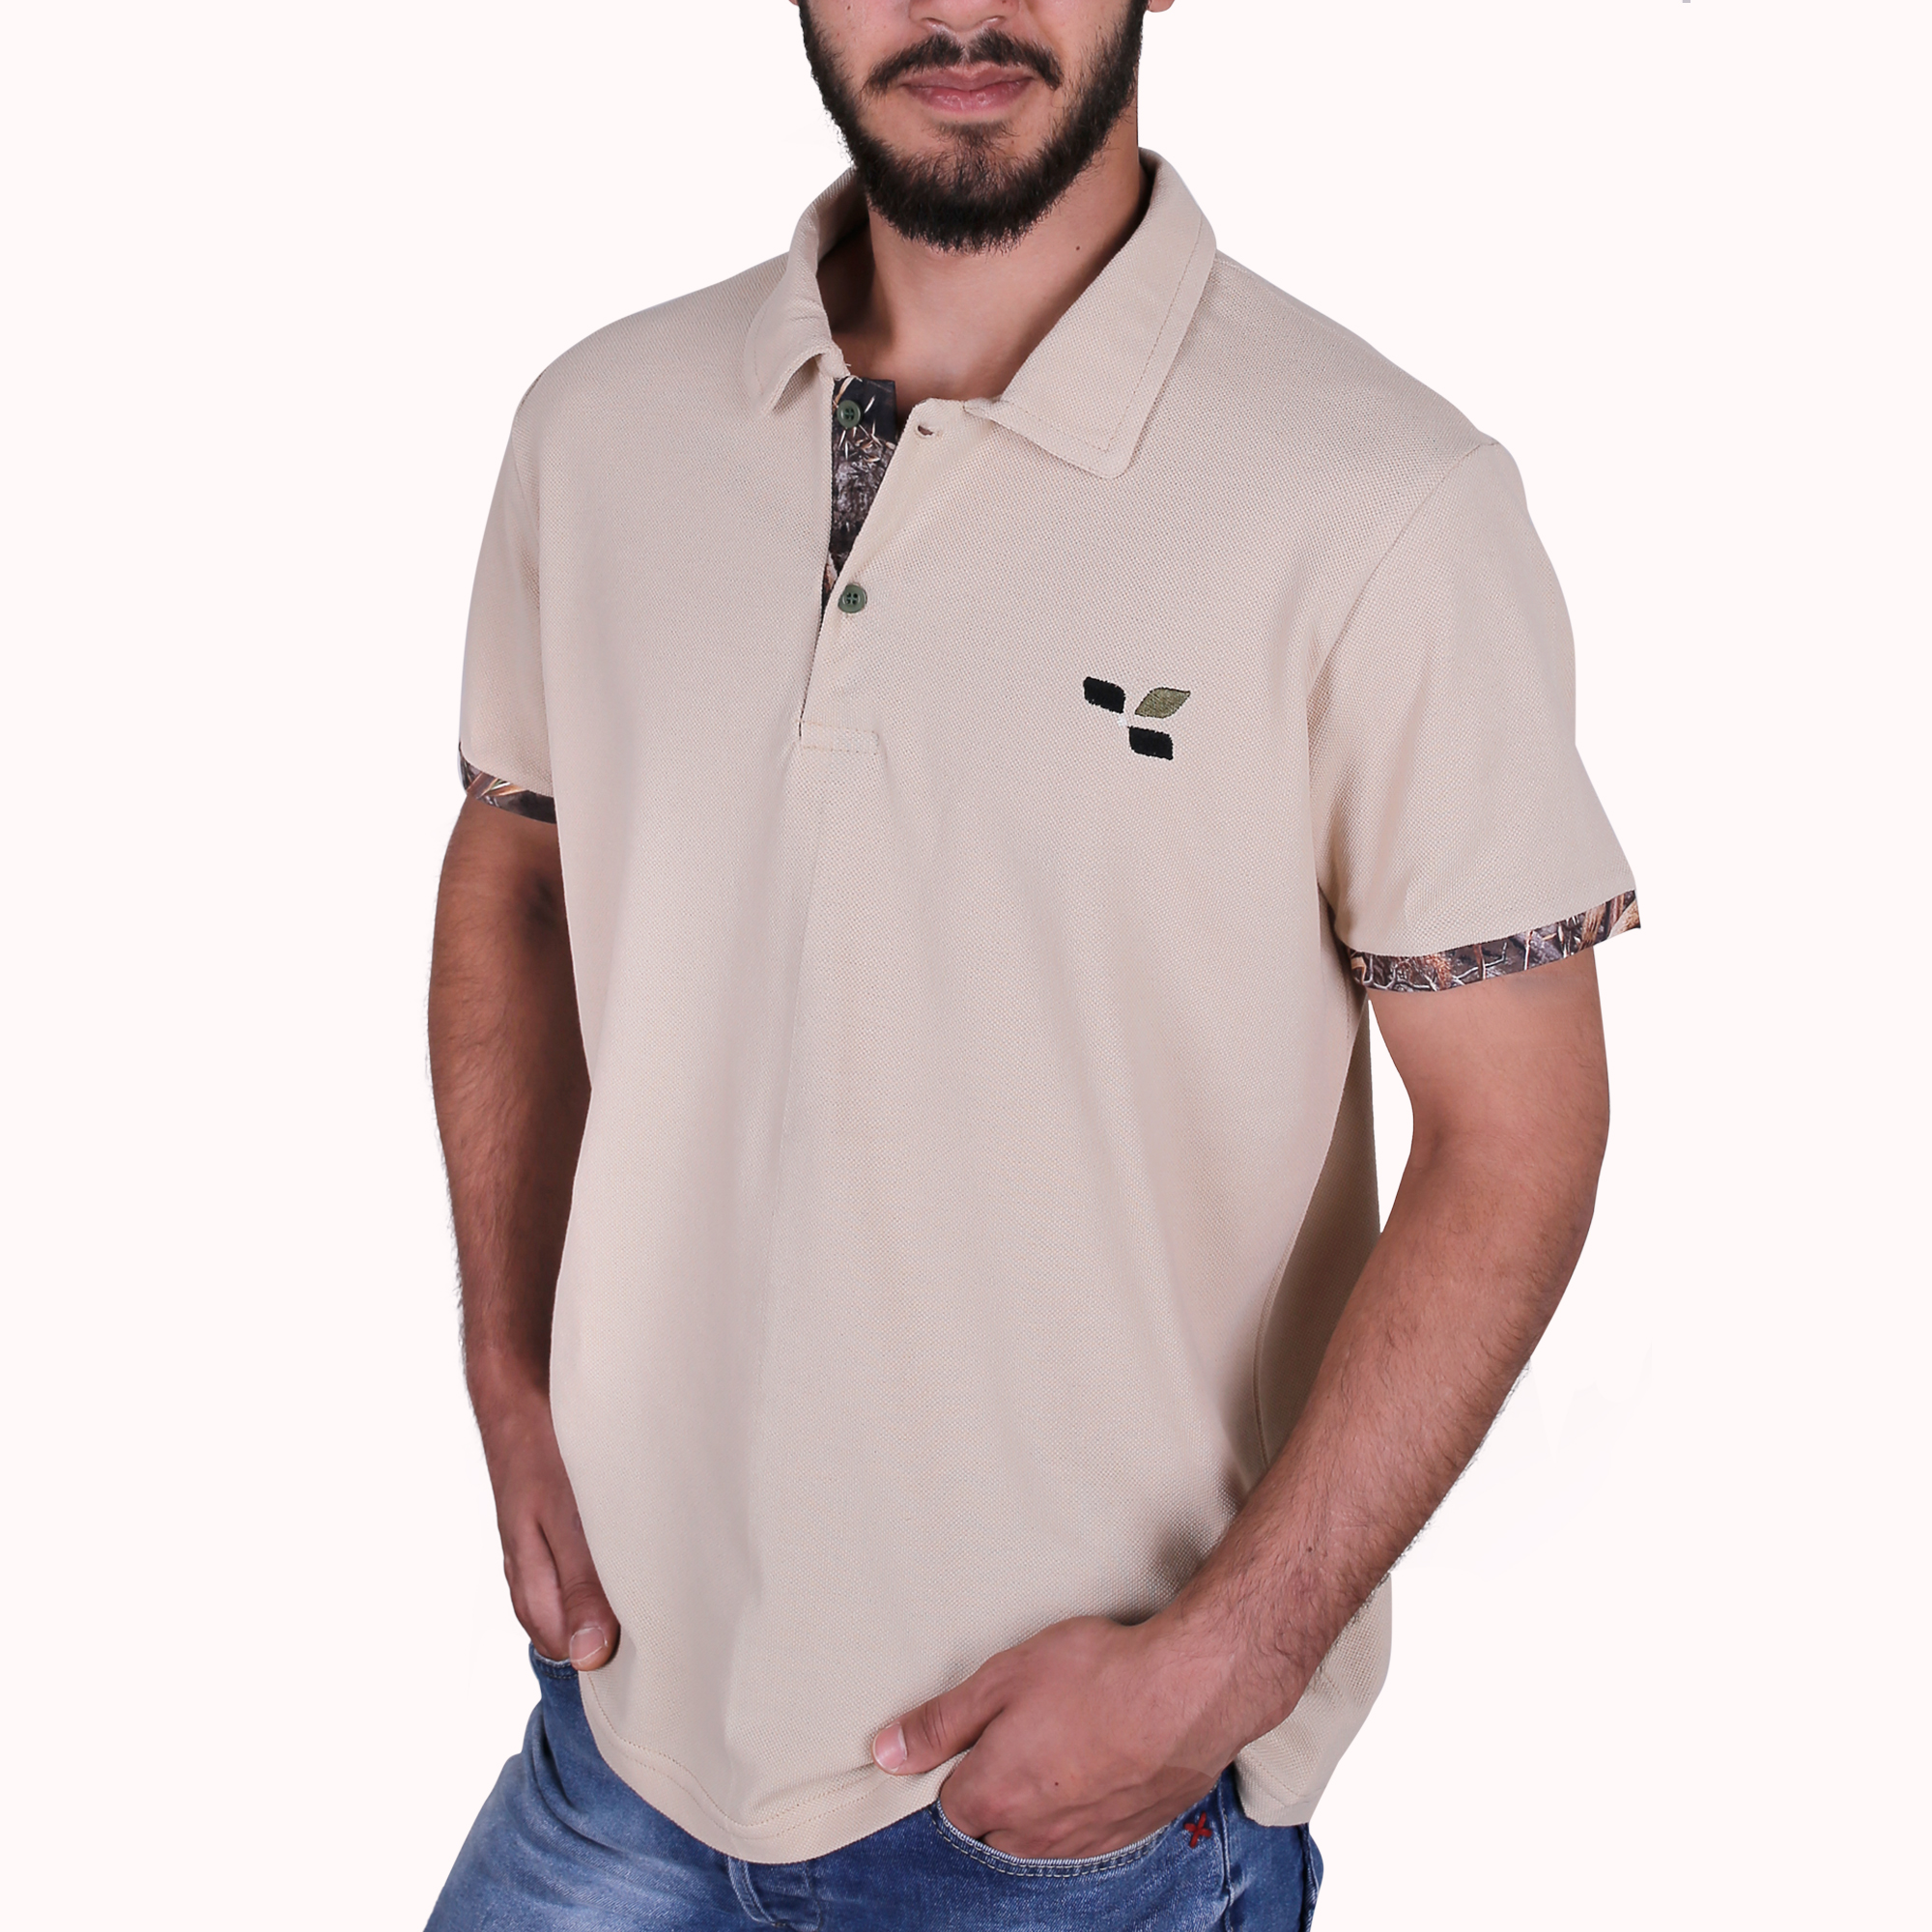 AUC Polo Erkek Tişört Gömlek Yaka Lacoste T shirt Bej Siyah Spor